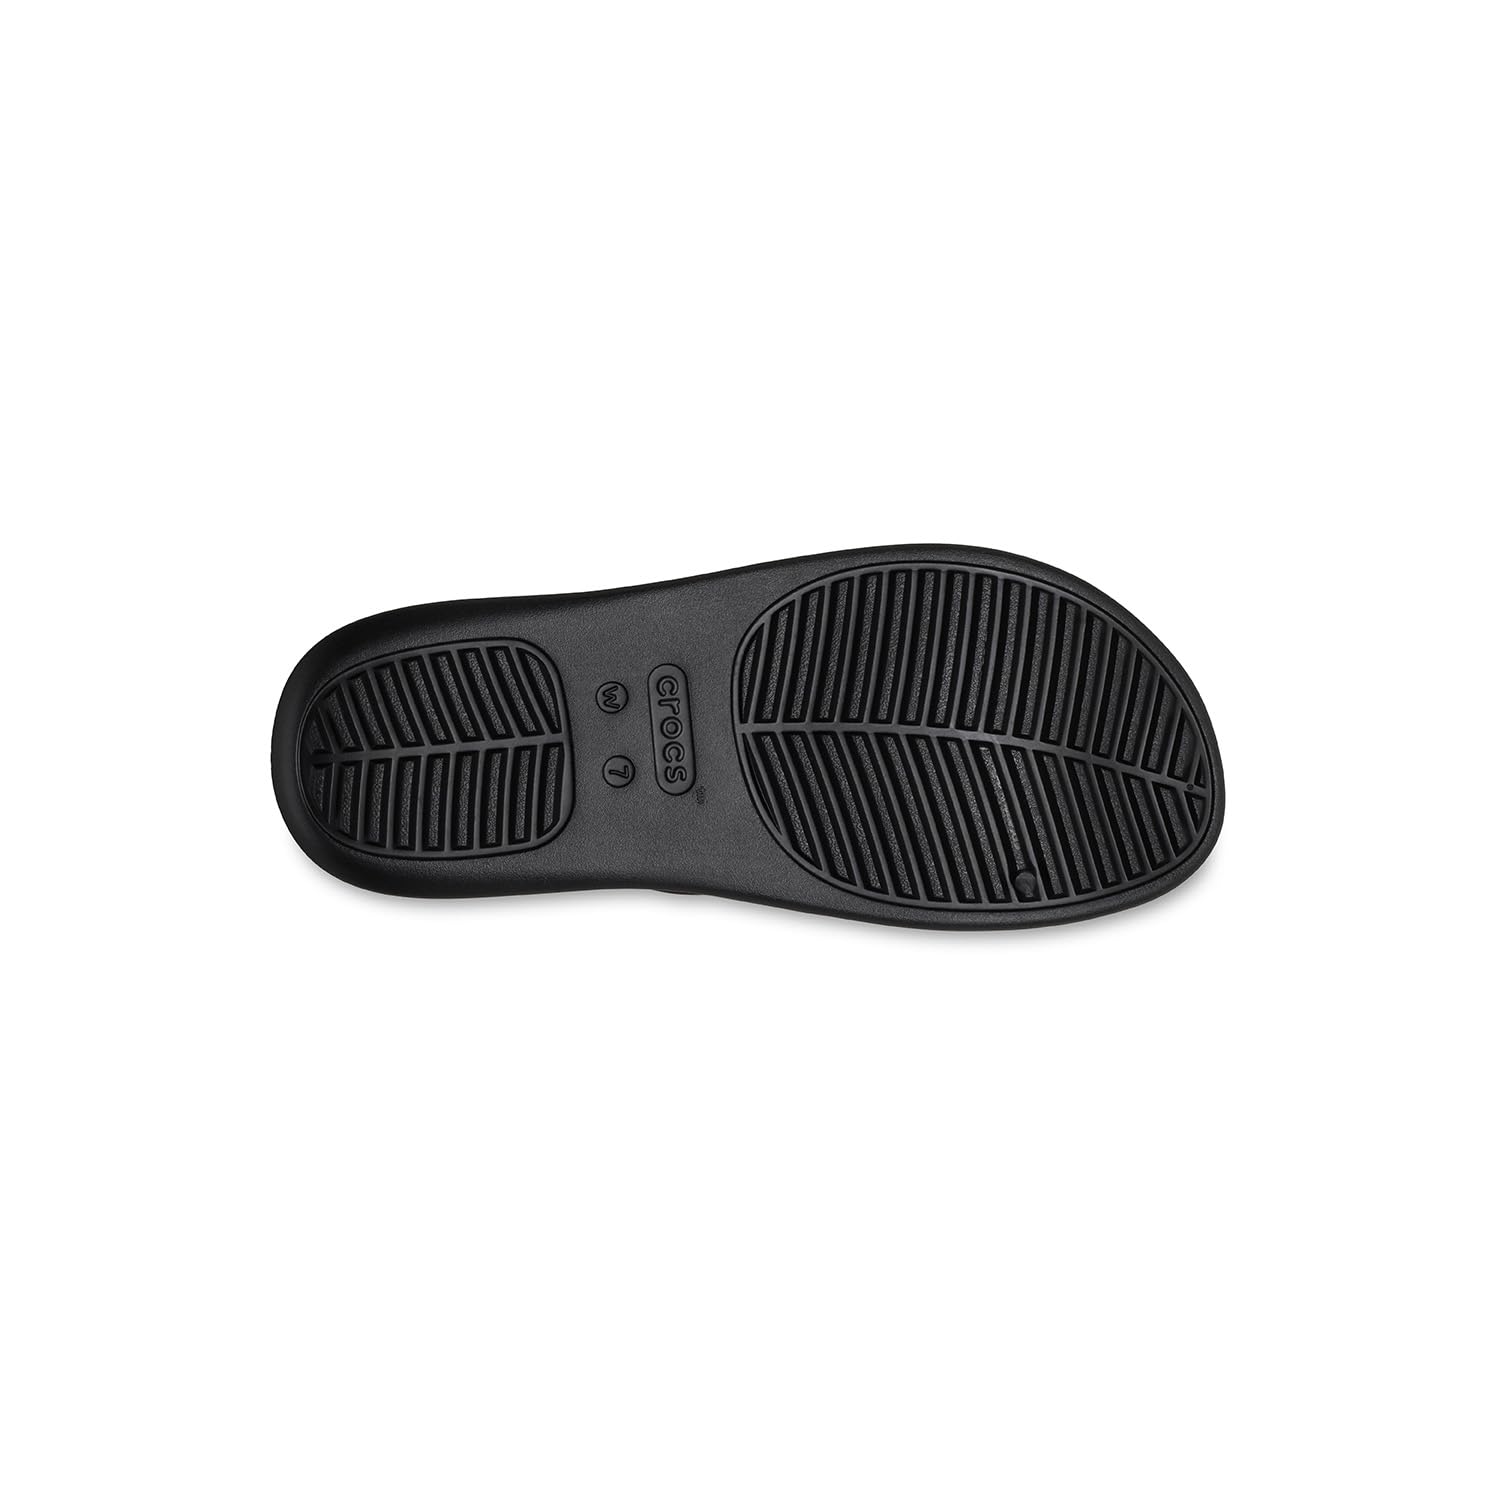 Crocs Women Getaway Platform Strappy Sandals